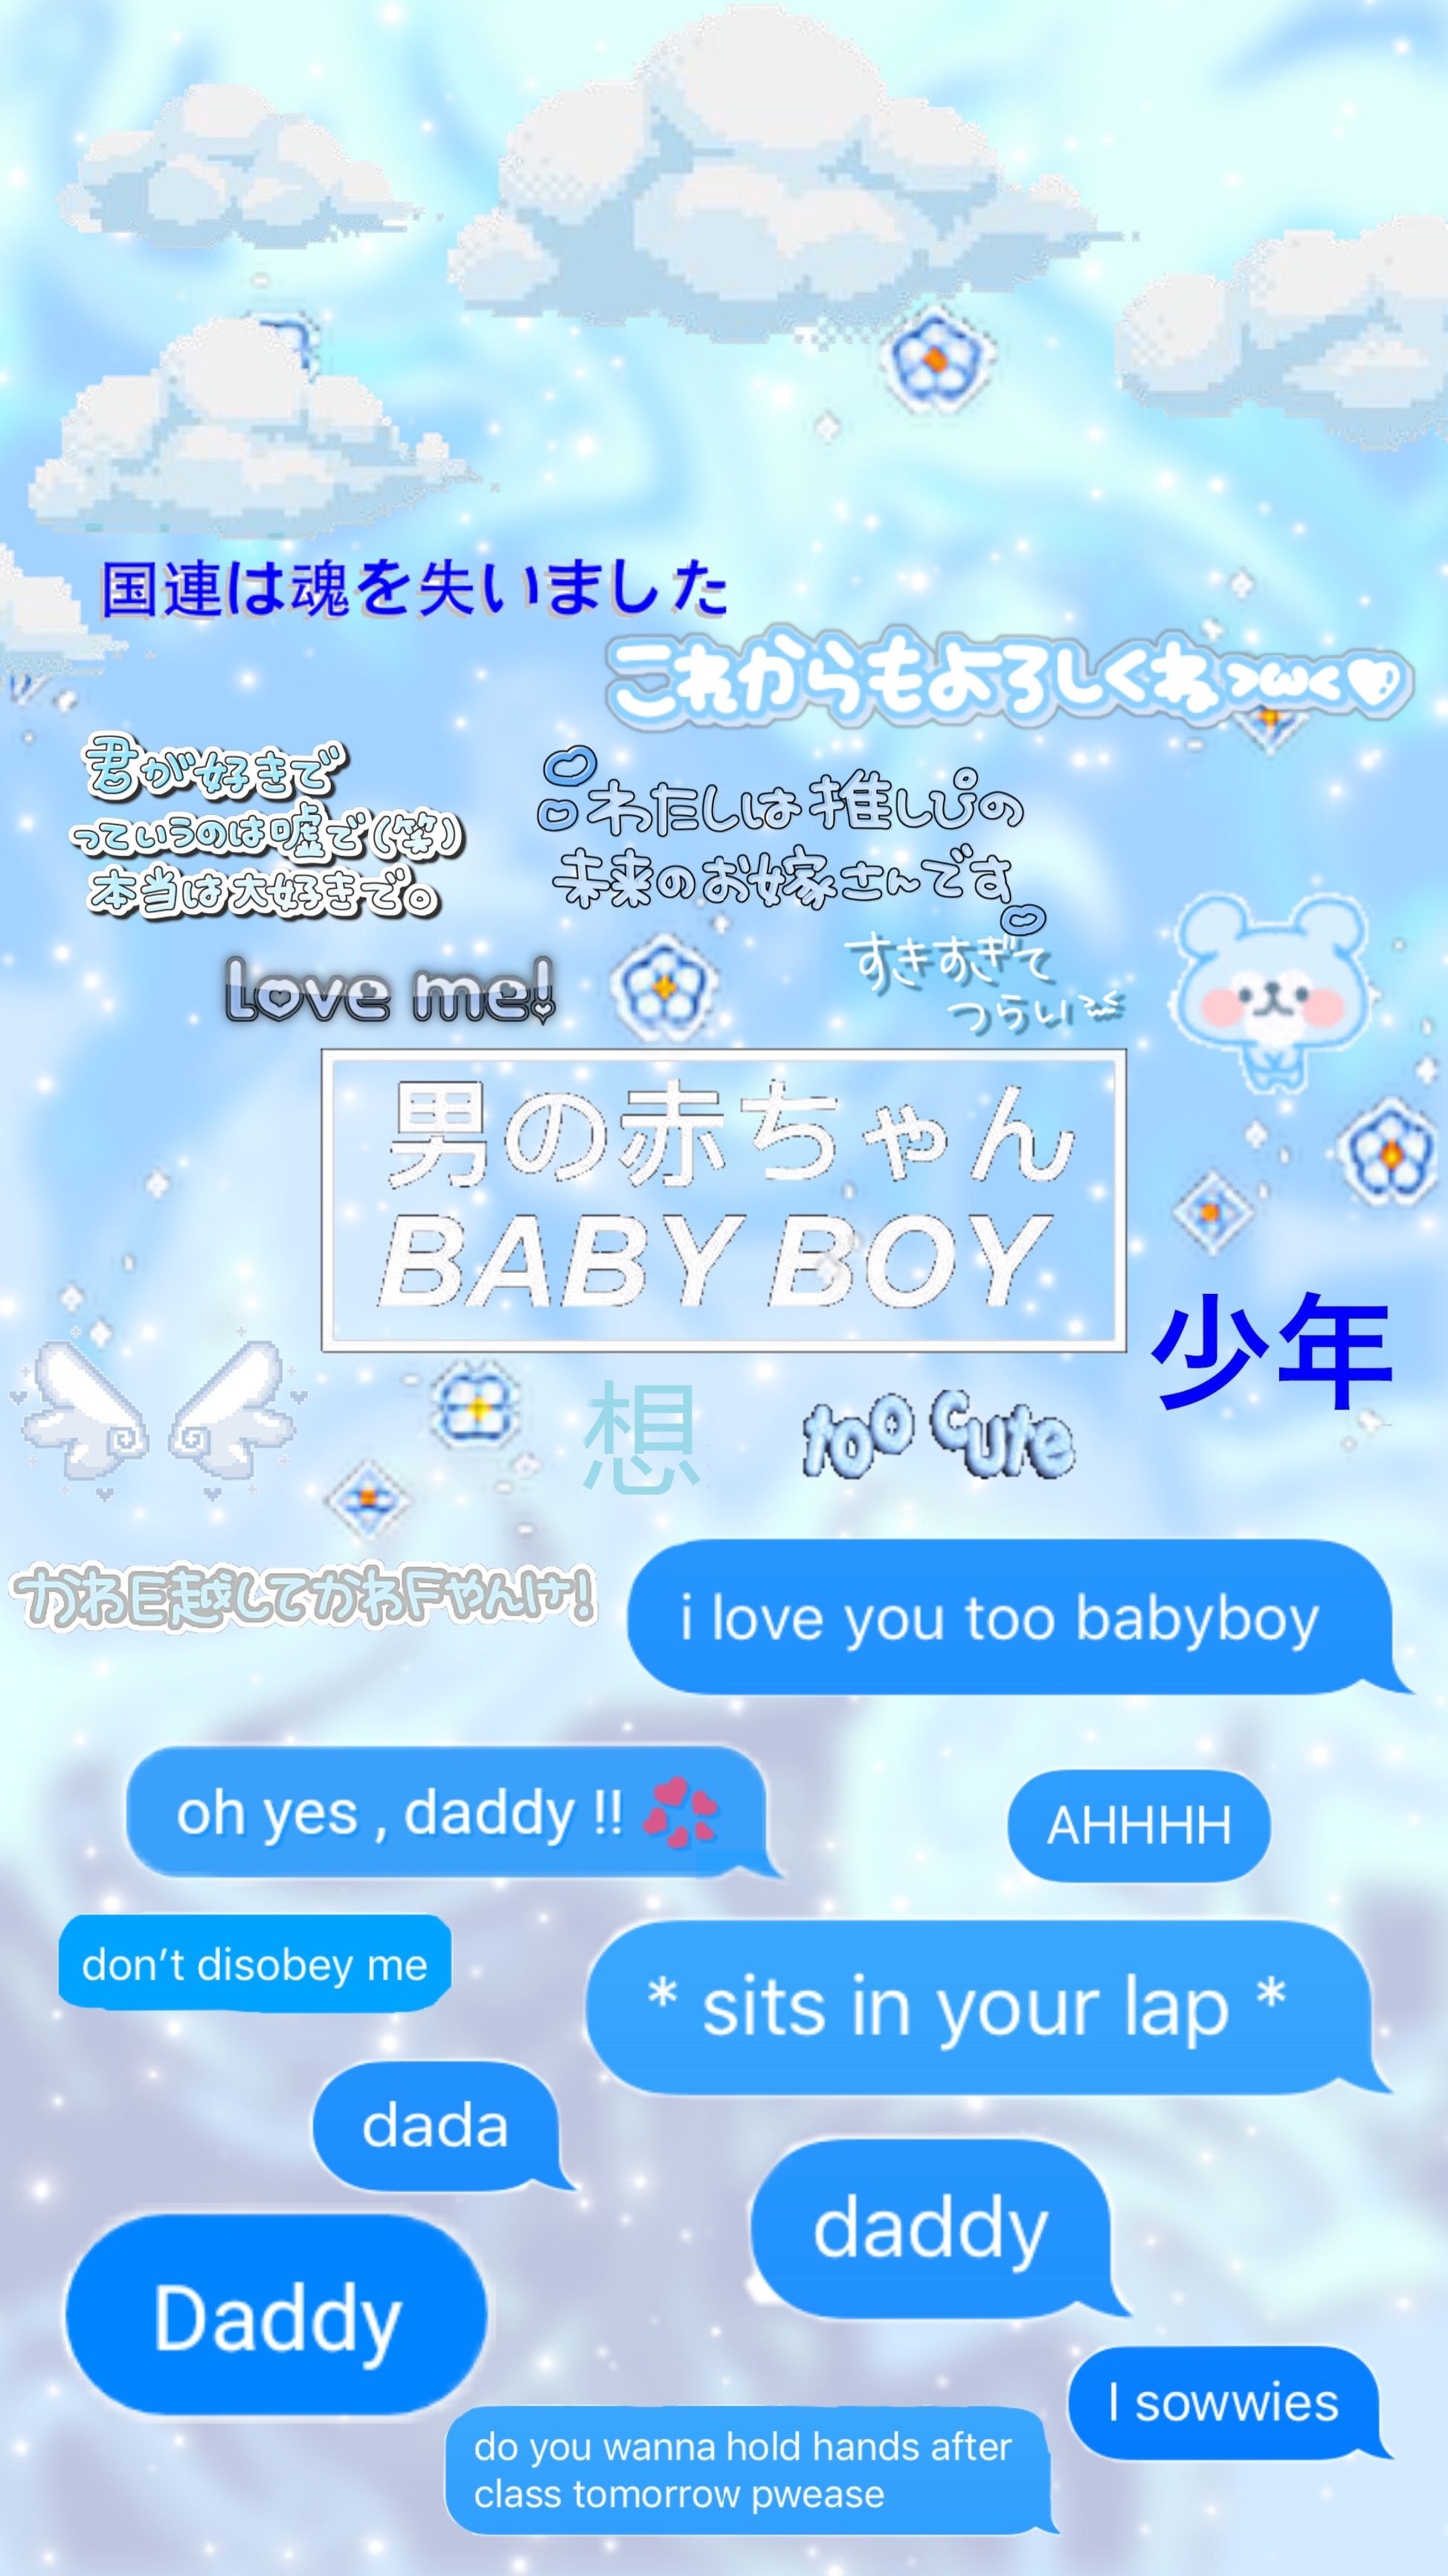 babyboy littlespace wallpaper Image